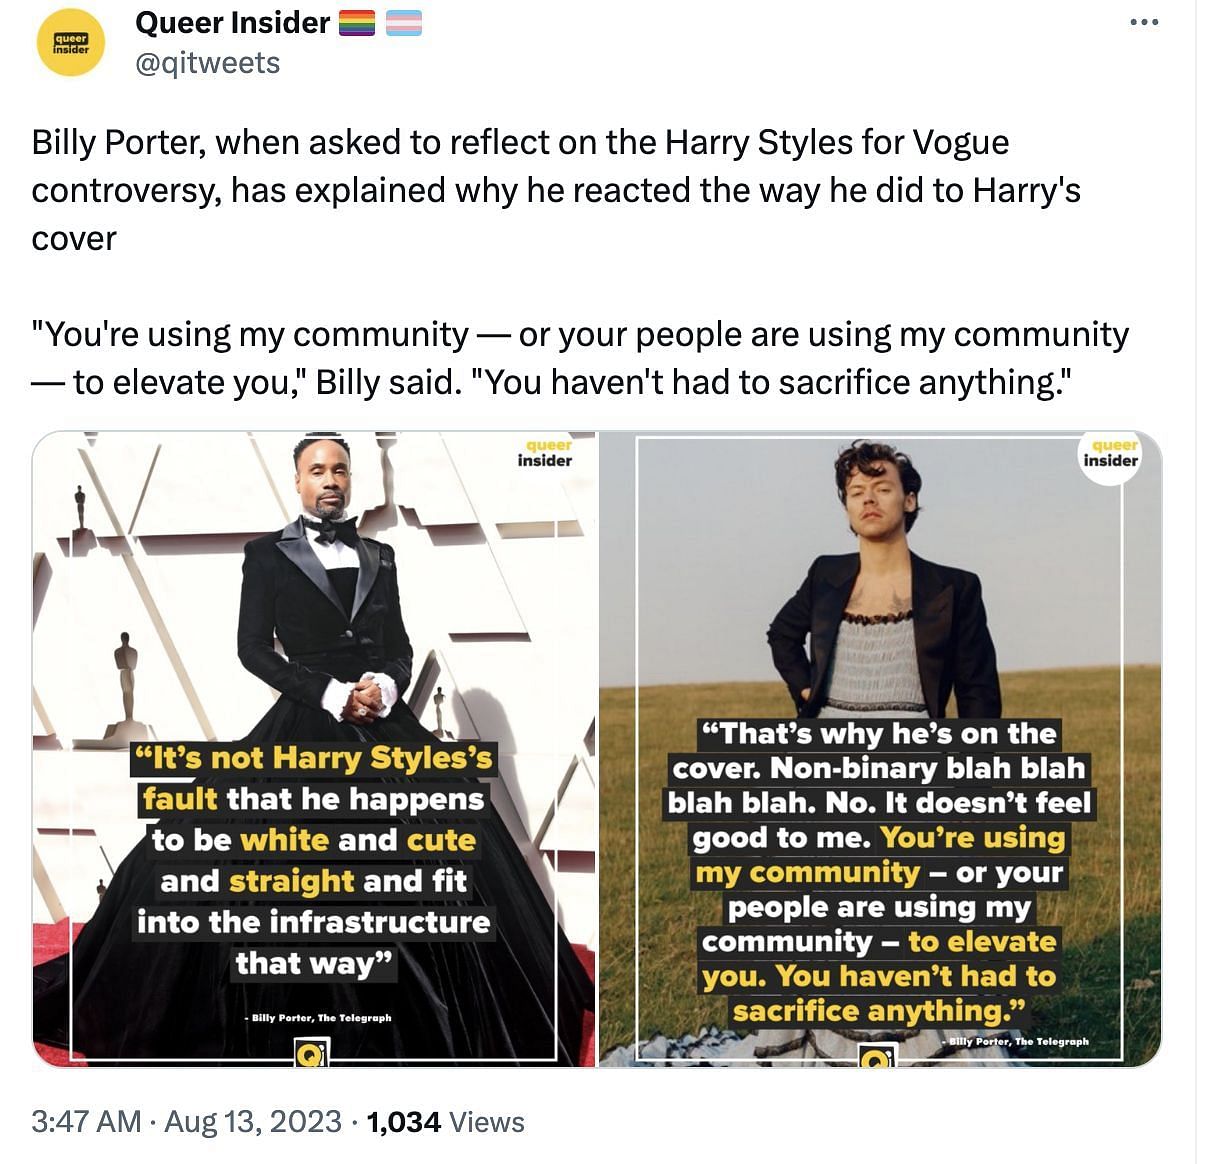 Billy Porter Criticizes Harry Styles Vogue Cover, Anna Wintour